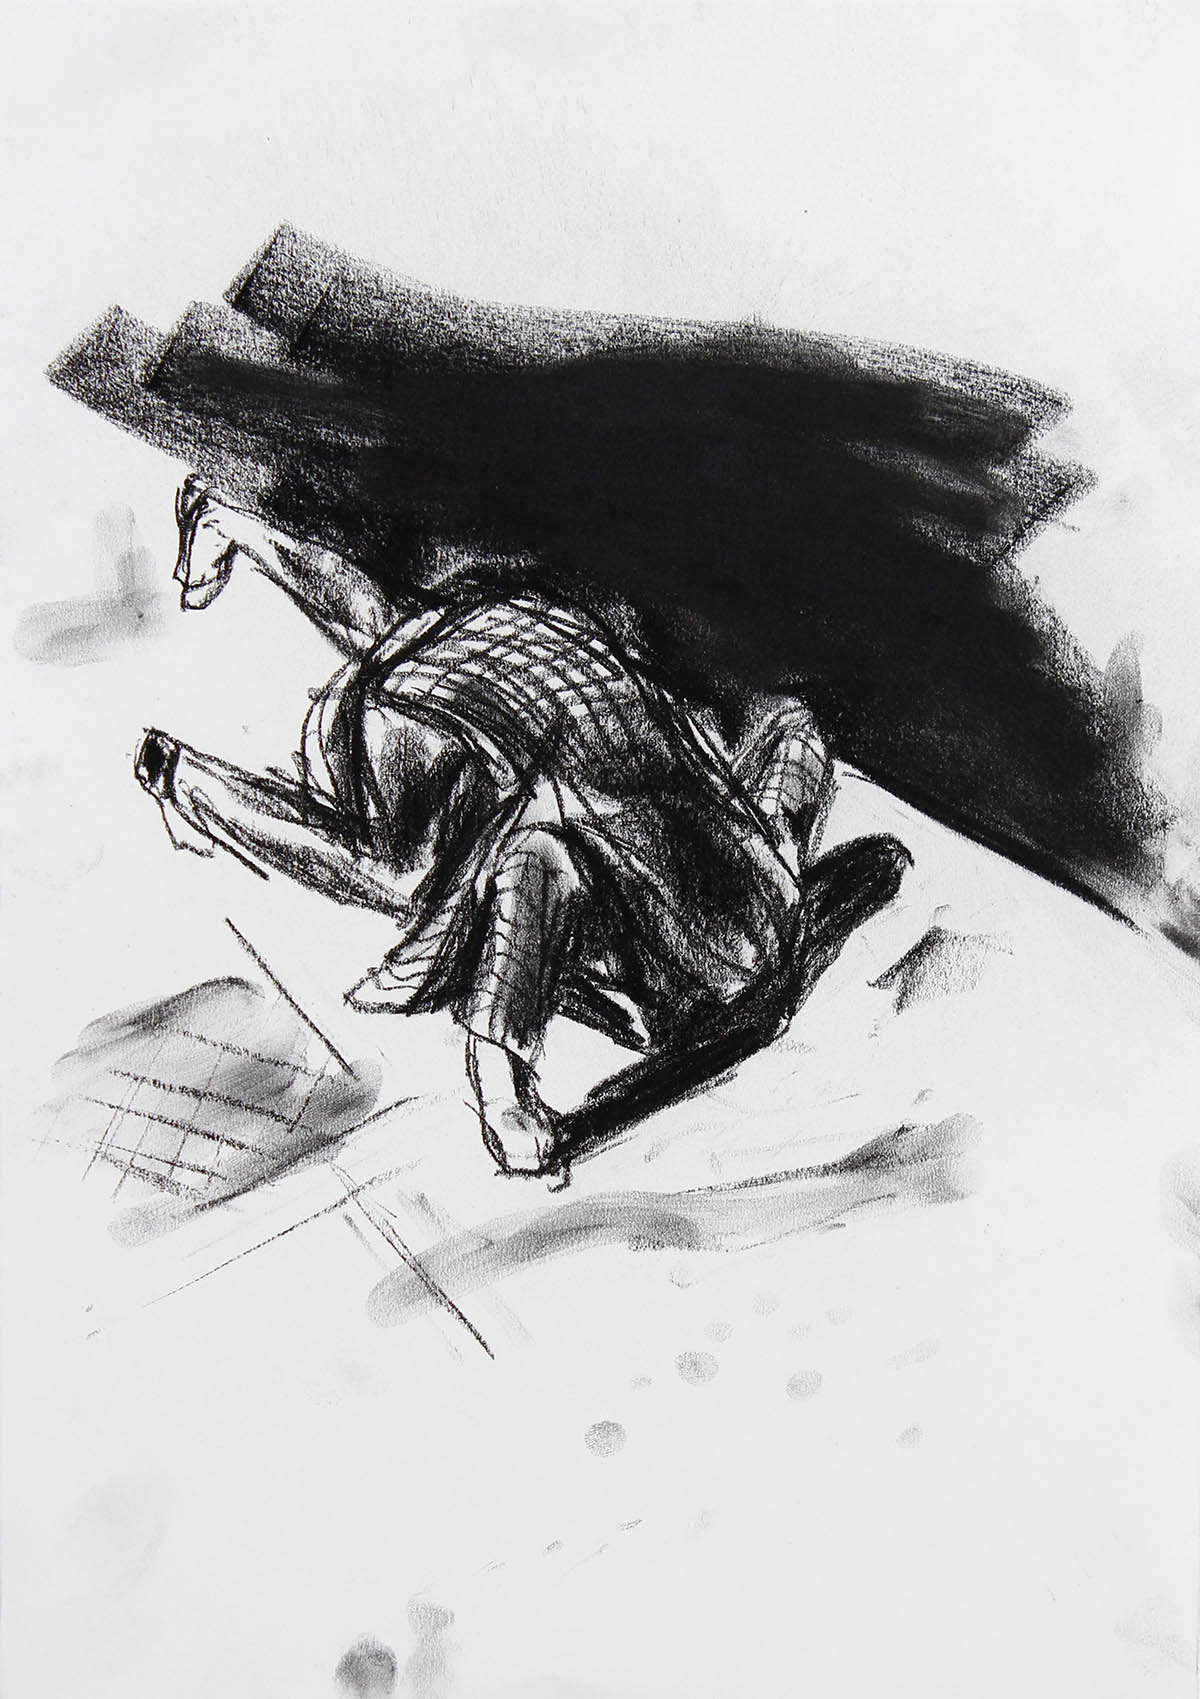 Luca Zarattini, Piero, 2021, carbone su carta, 42 x 29,7 cm